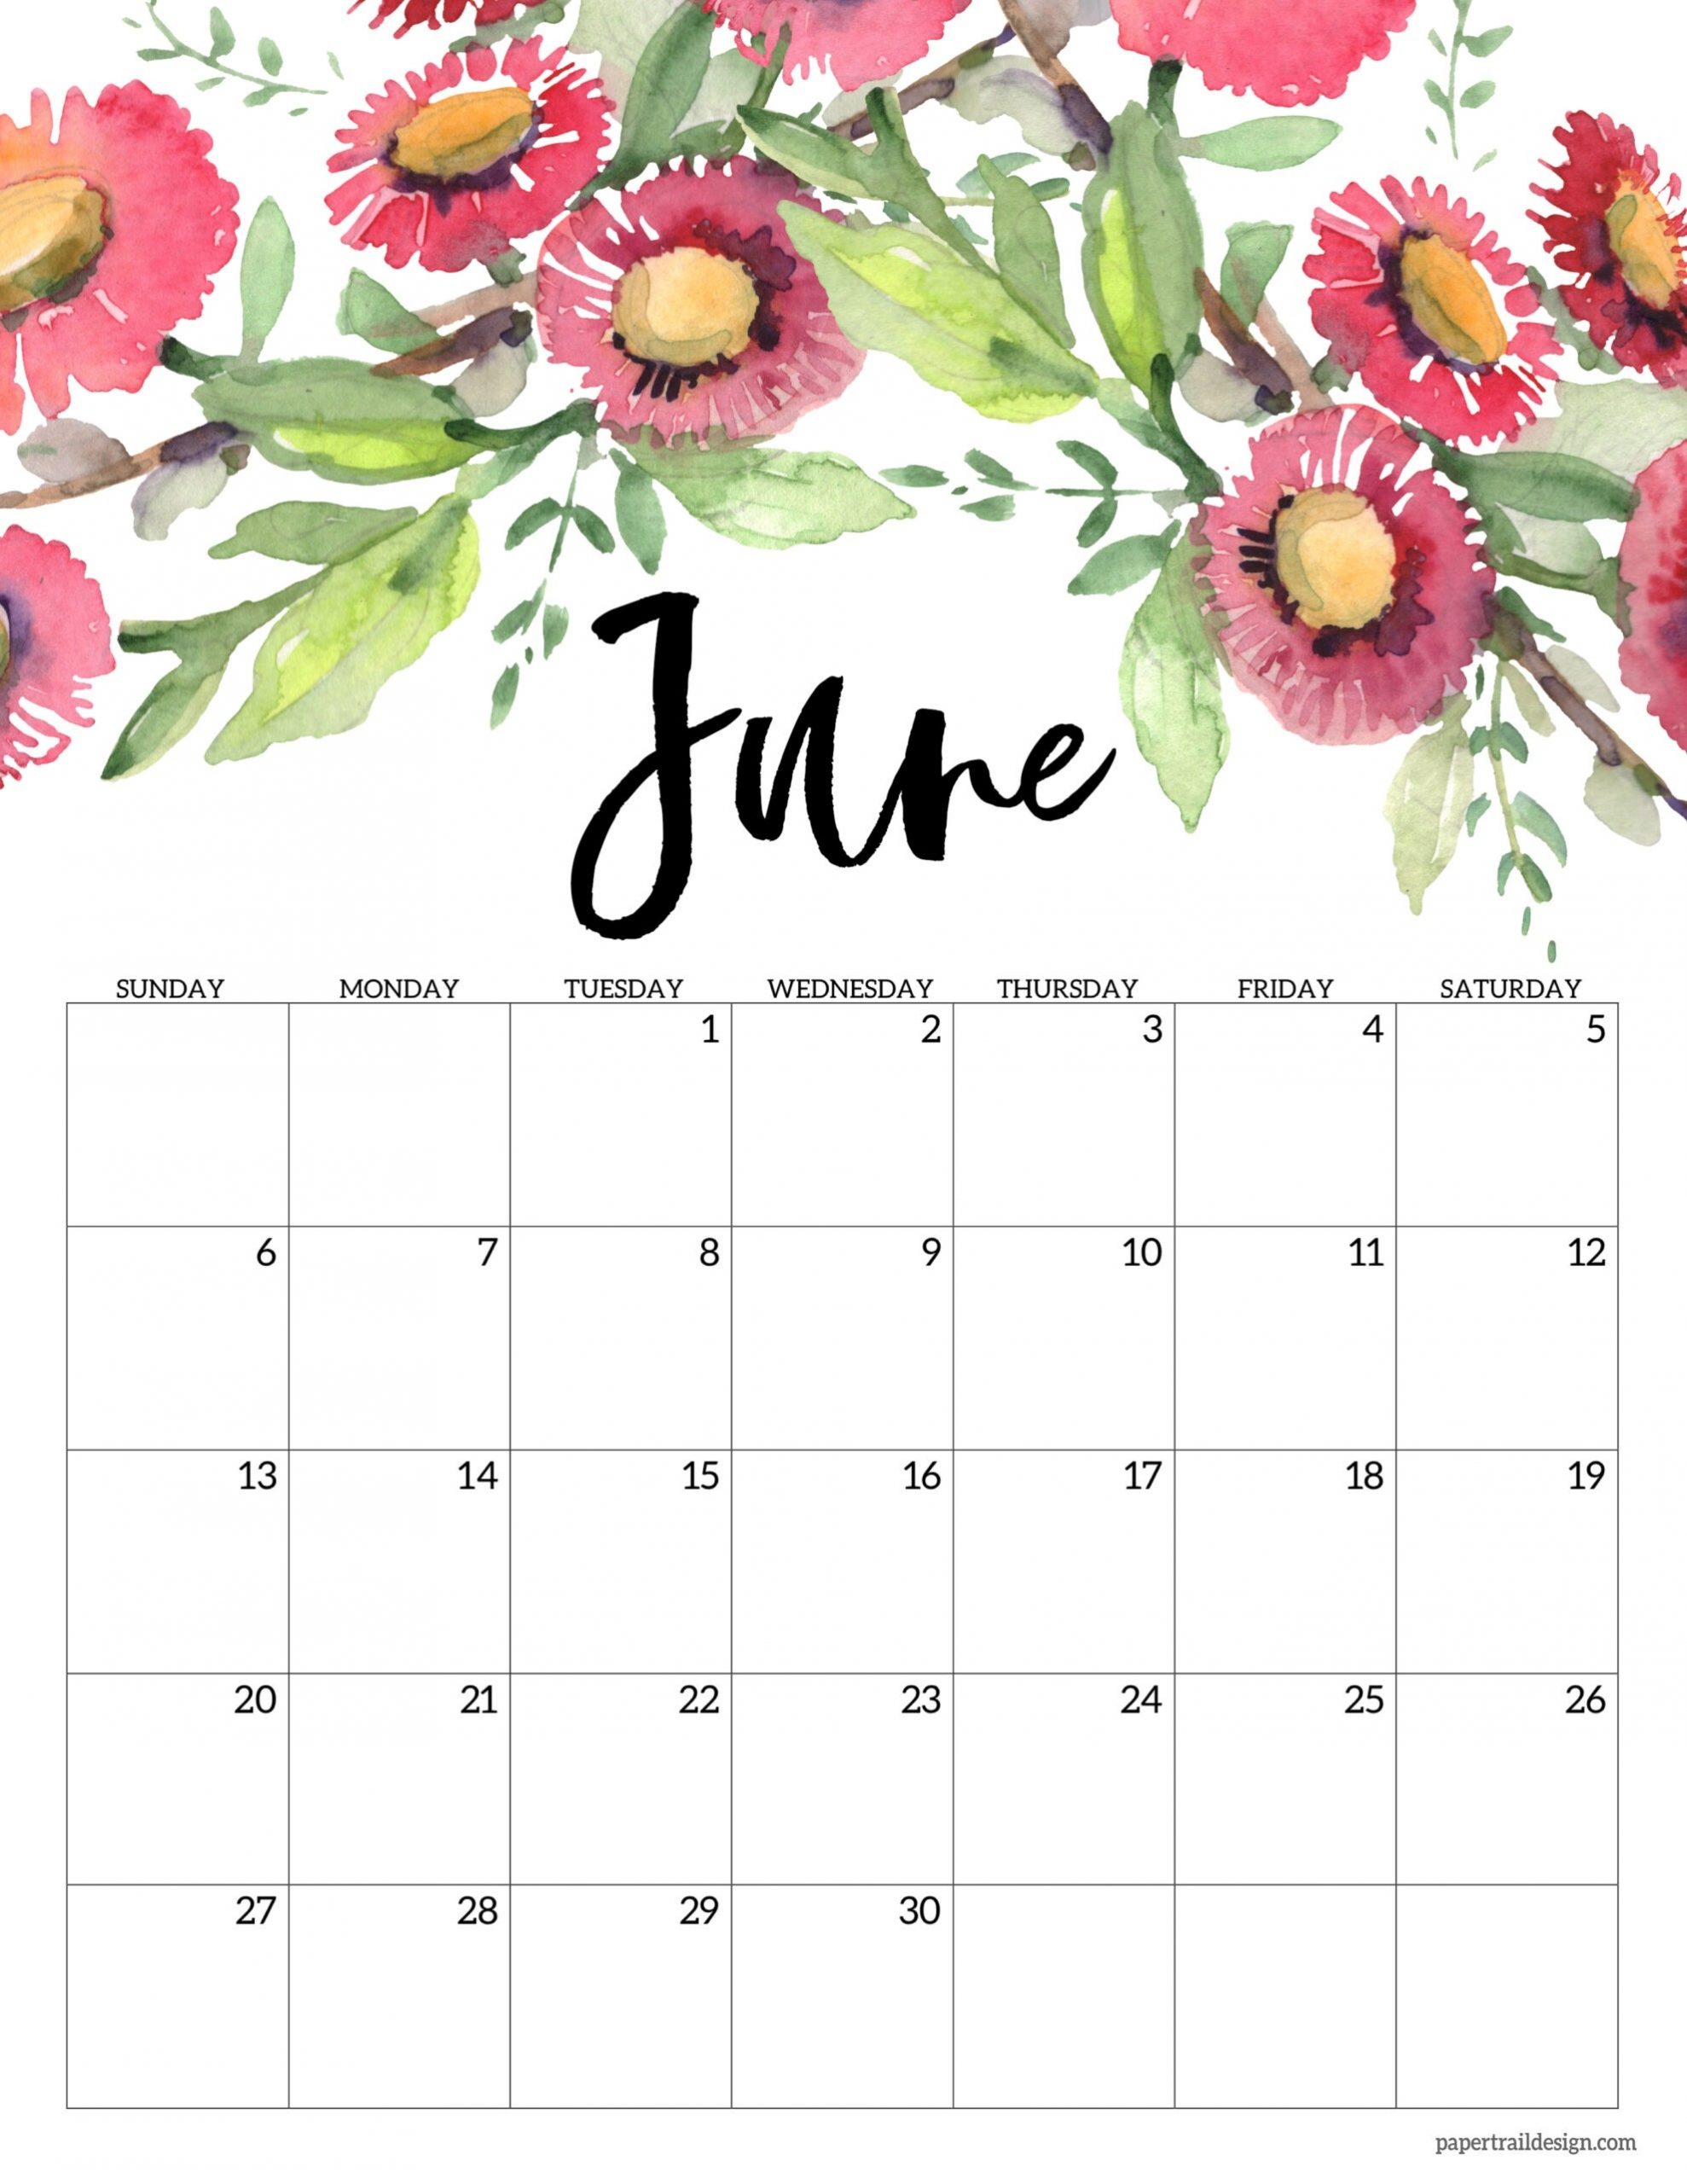 Free Printable 2021 Floral Calendar | Paper Trail Design-June 2021 Free Calendar